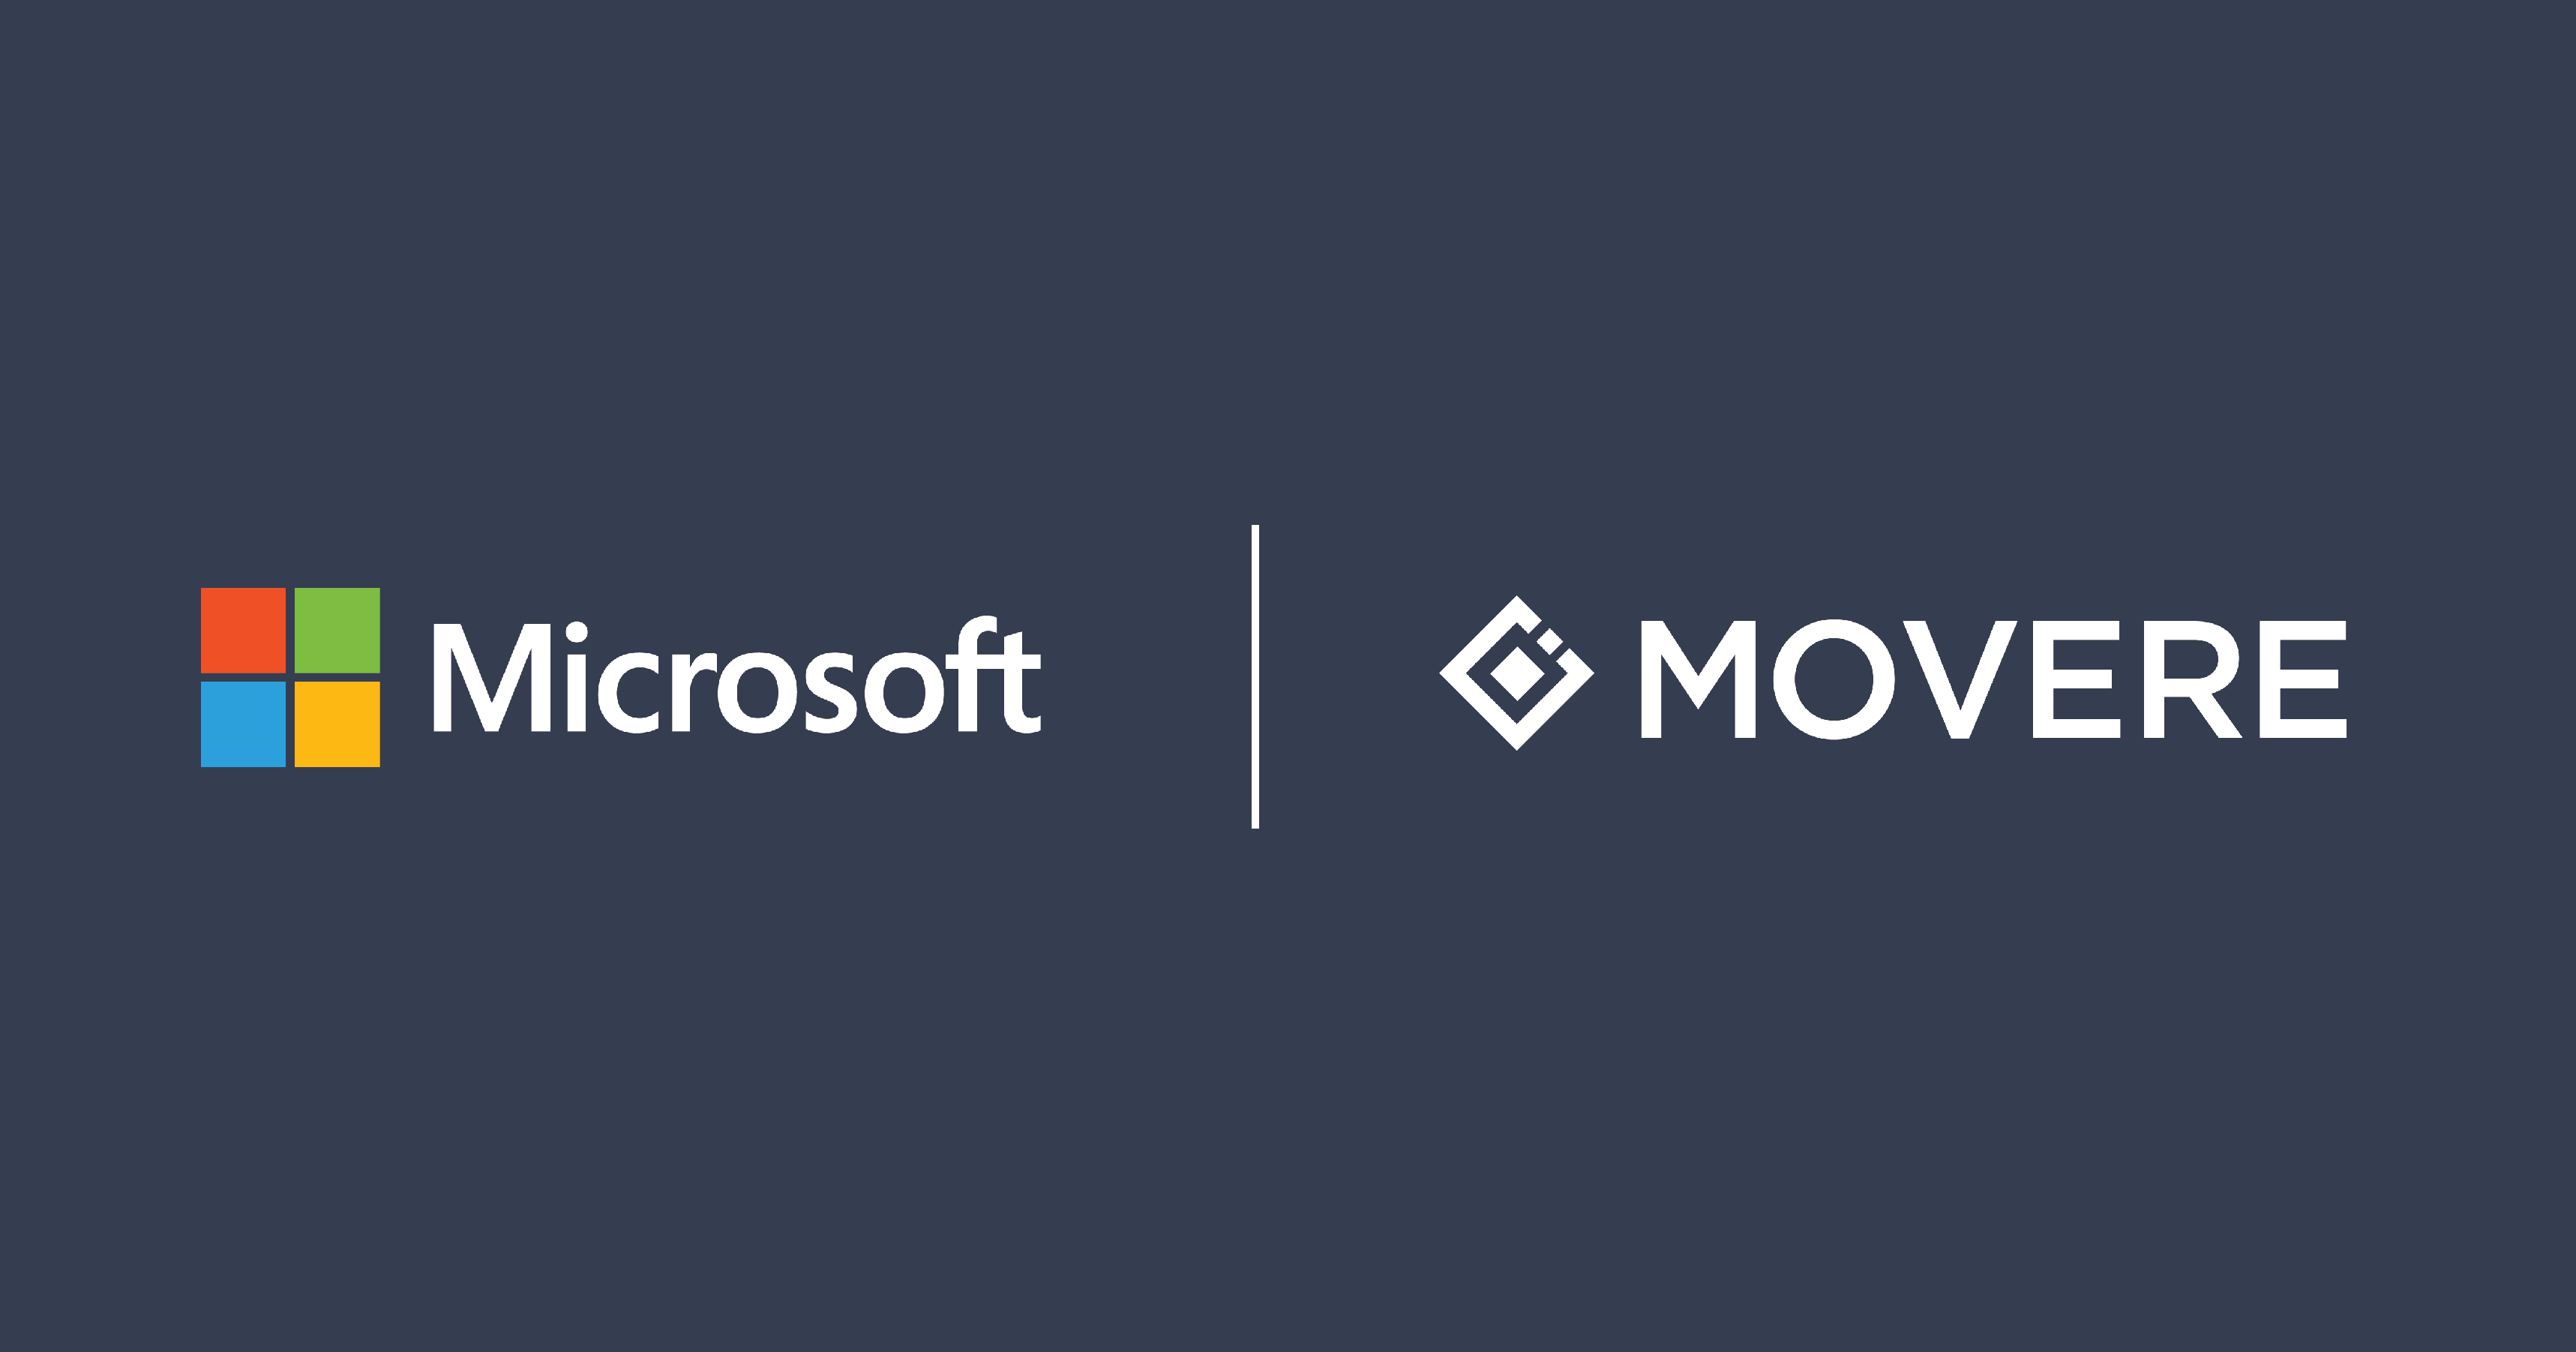 alt="Microsoft x Movere"